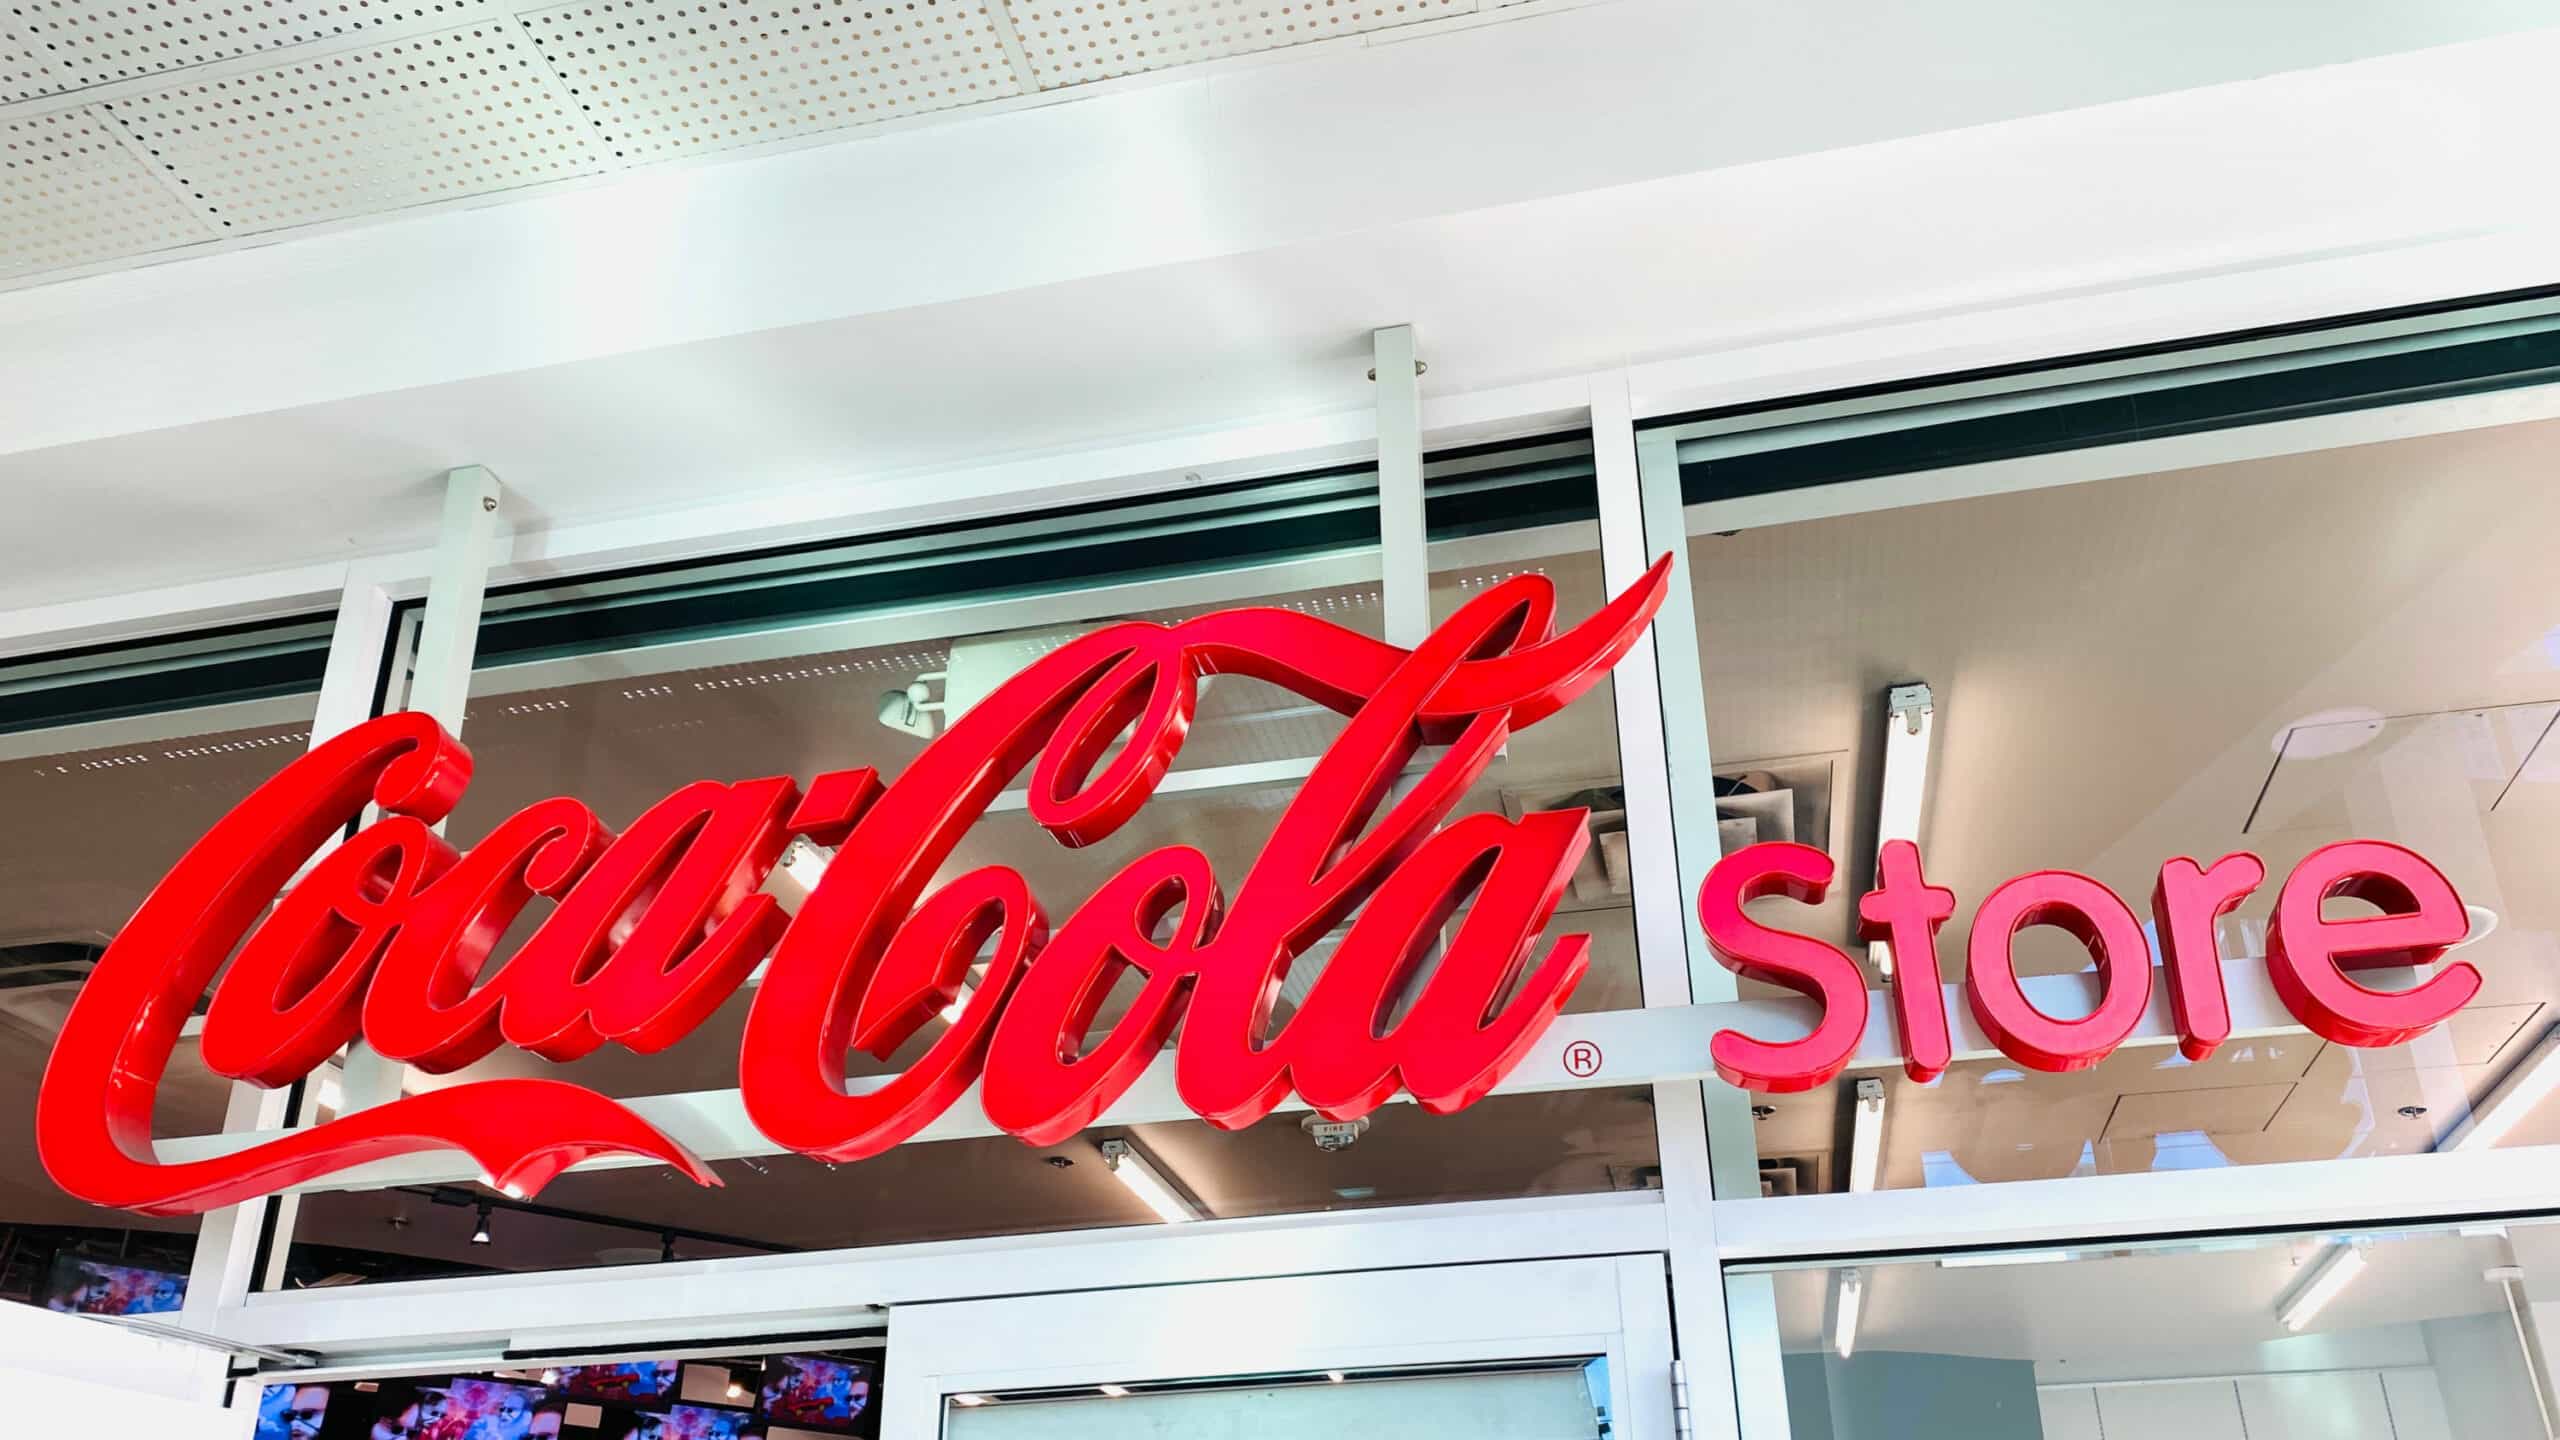 exterior sign of the Coca-Cola store in Las Vegas